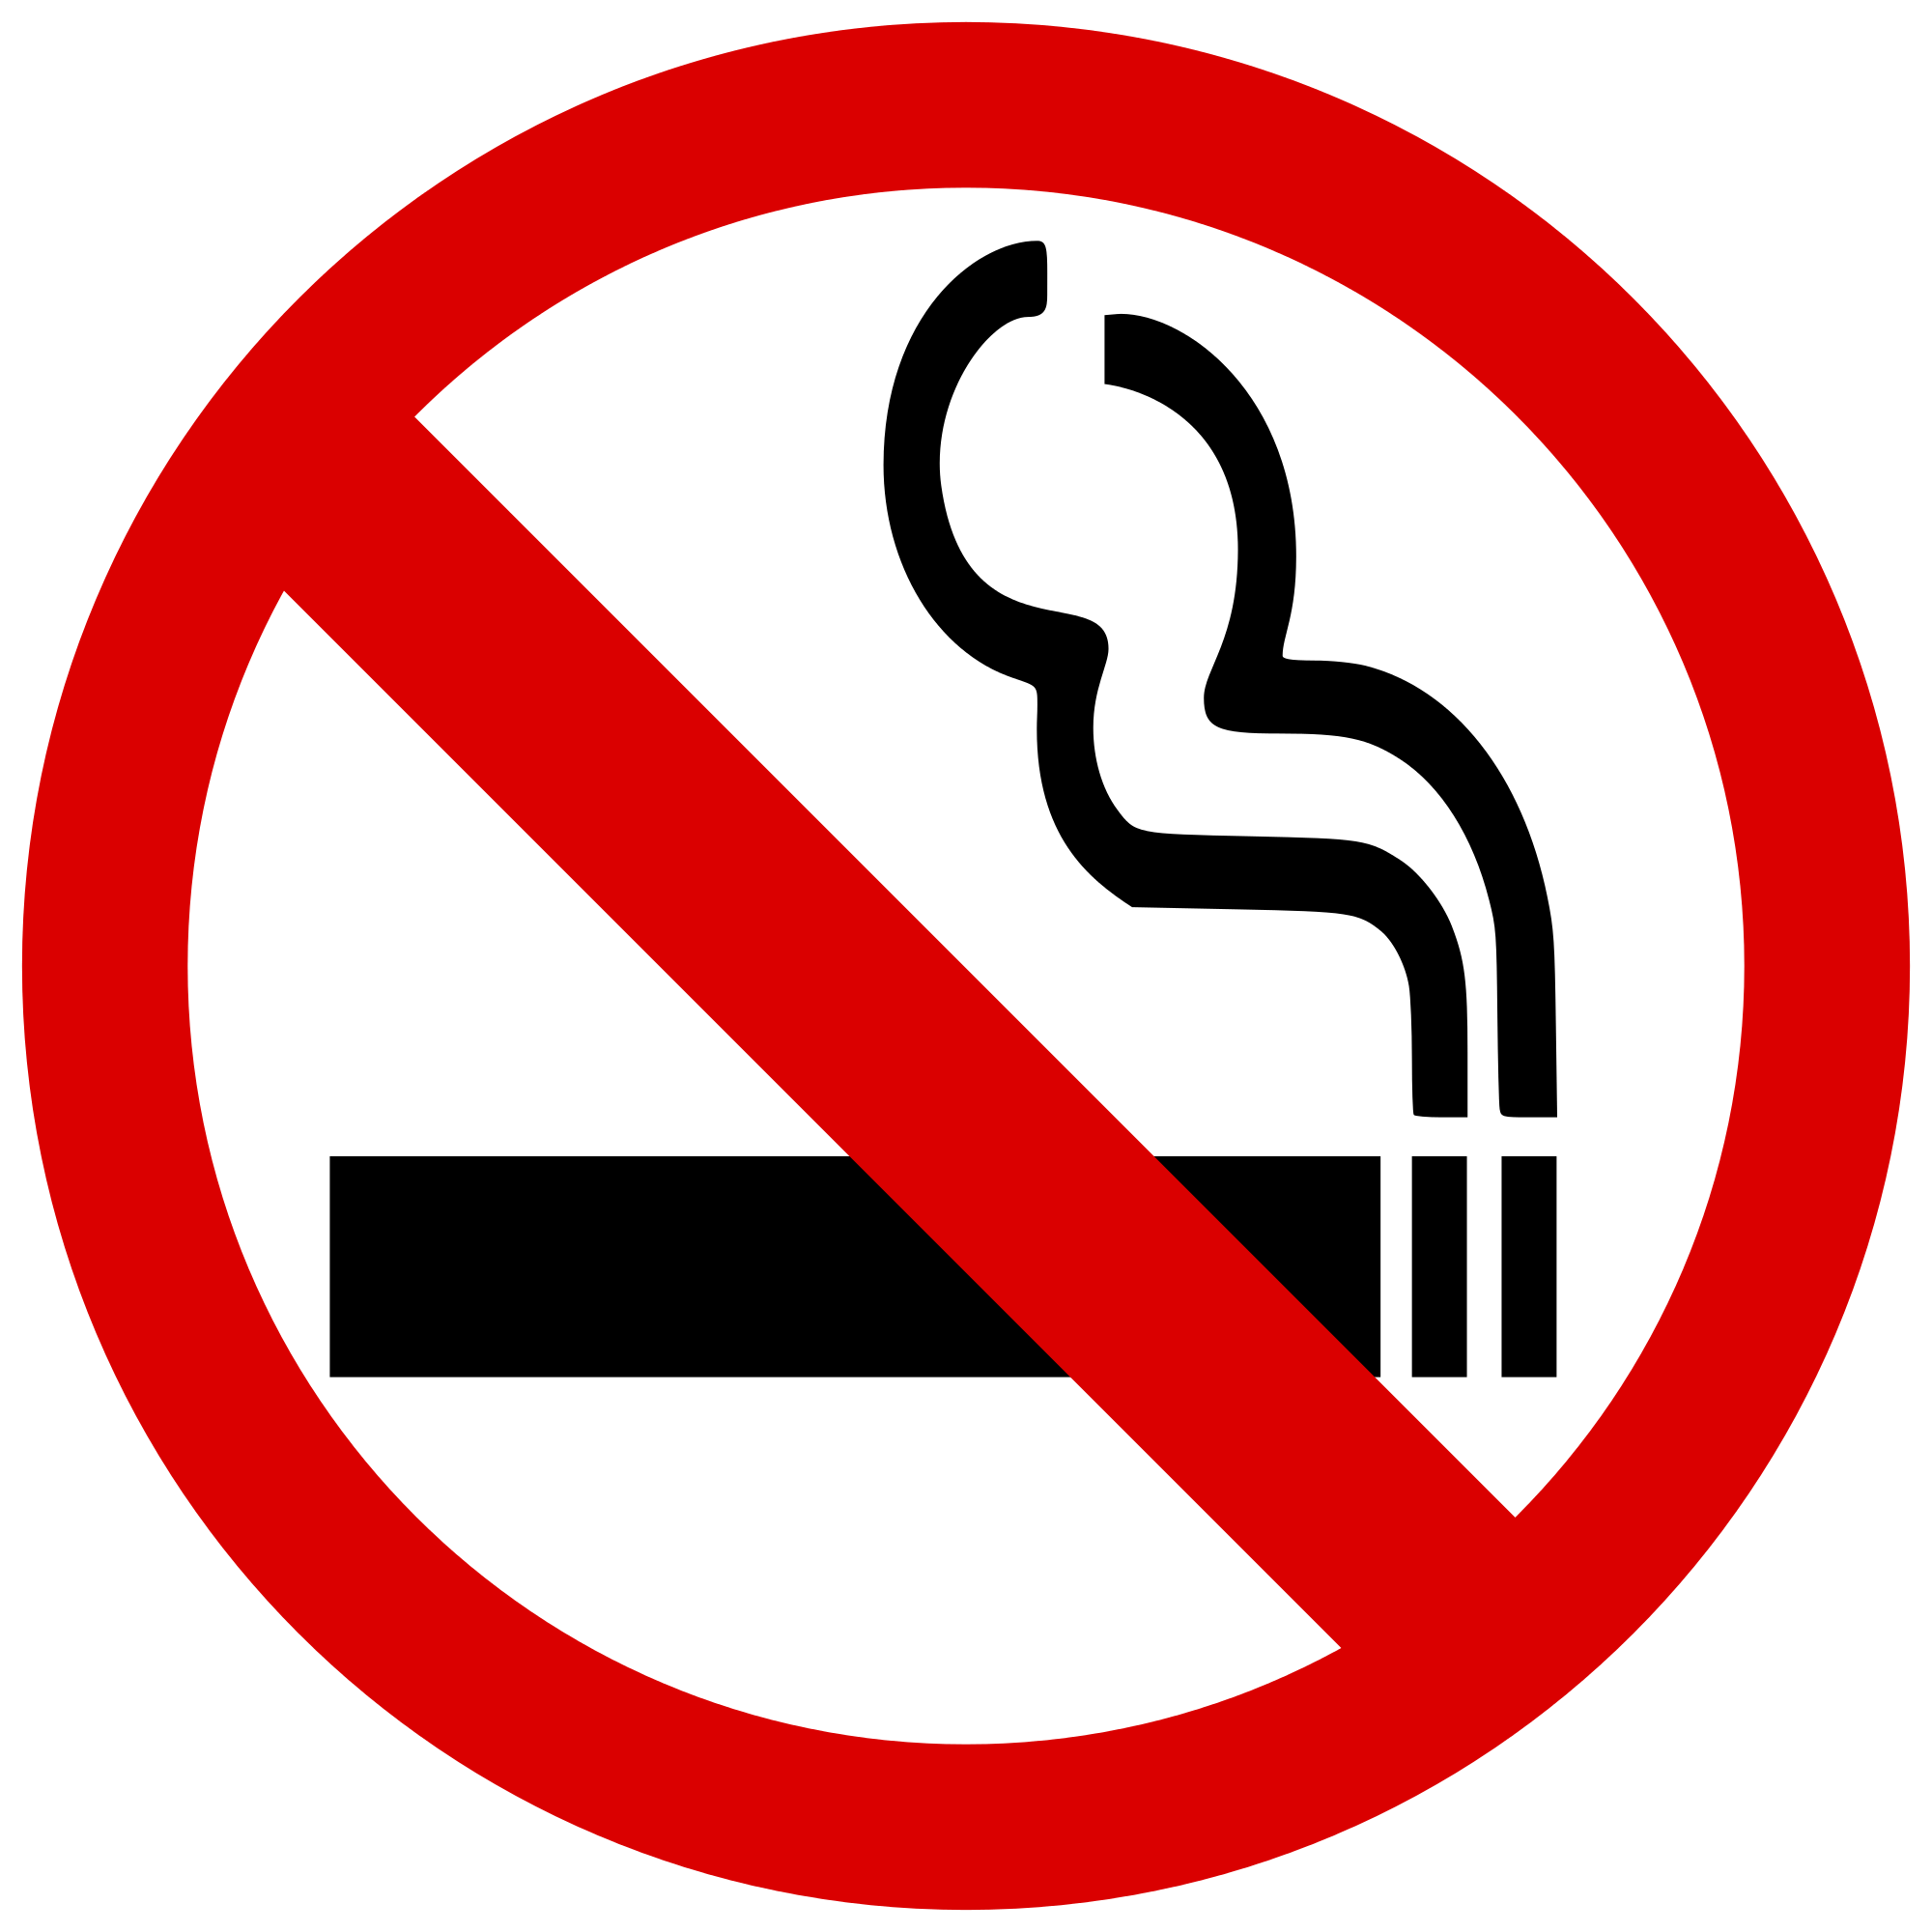 Red Smoke Logo - File:No smoking symbol.svg - Wikimedia Commons